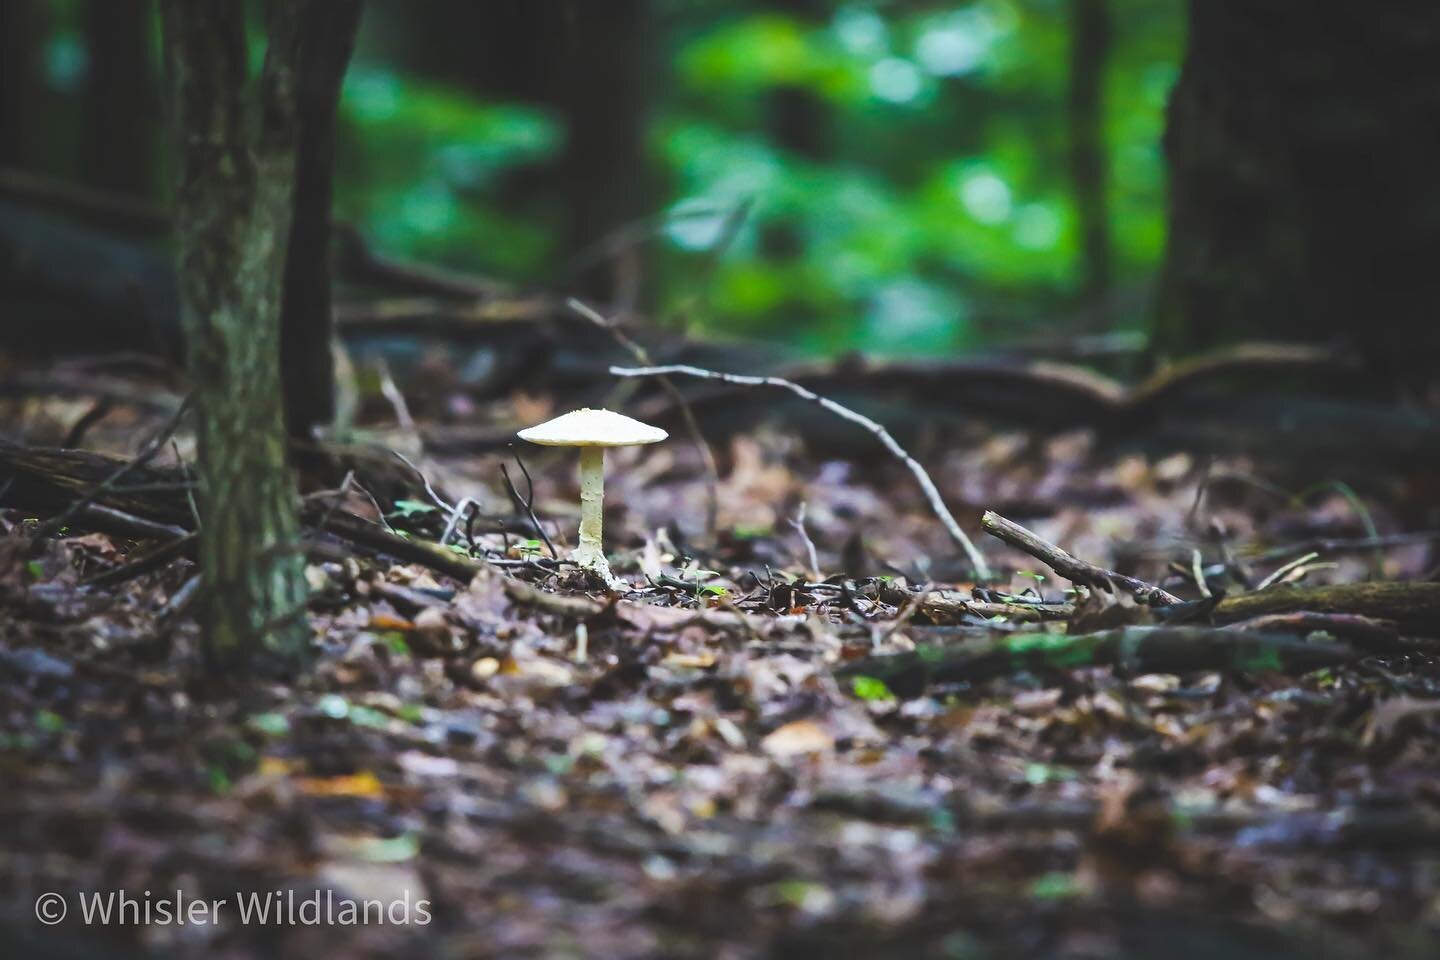 Mushrooms of the forest floor at Loch Raven. #forest #mushrooms #fingi #outdoors #wildlife #outdoorphotography #wildlifephotography #nature #naturephotography #fungiphotography #mushroomphotography #conservation WhislerWildlandsLLC.com